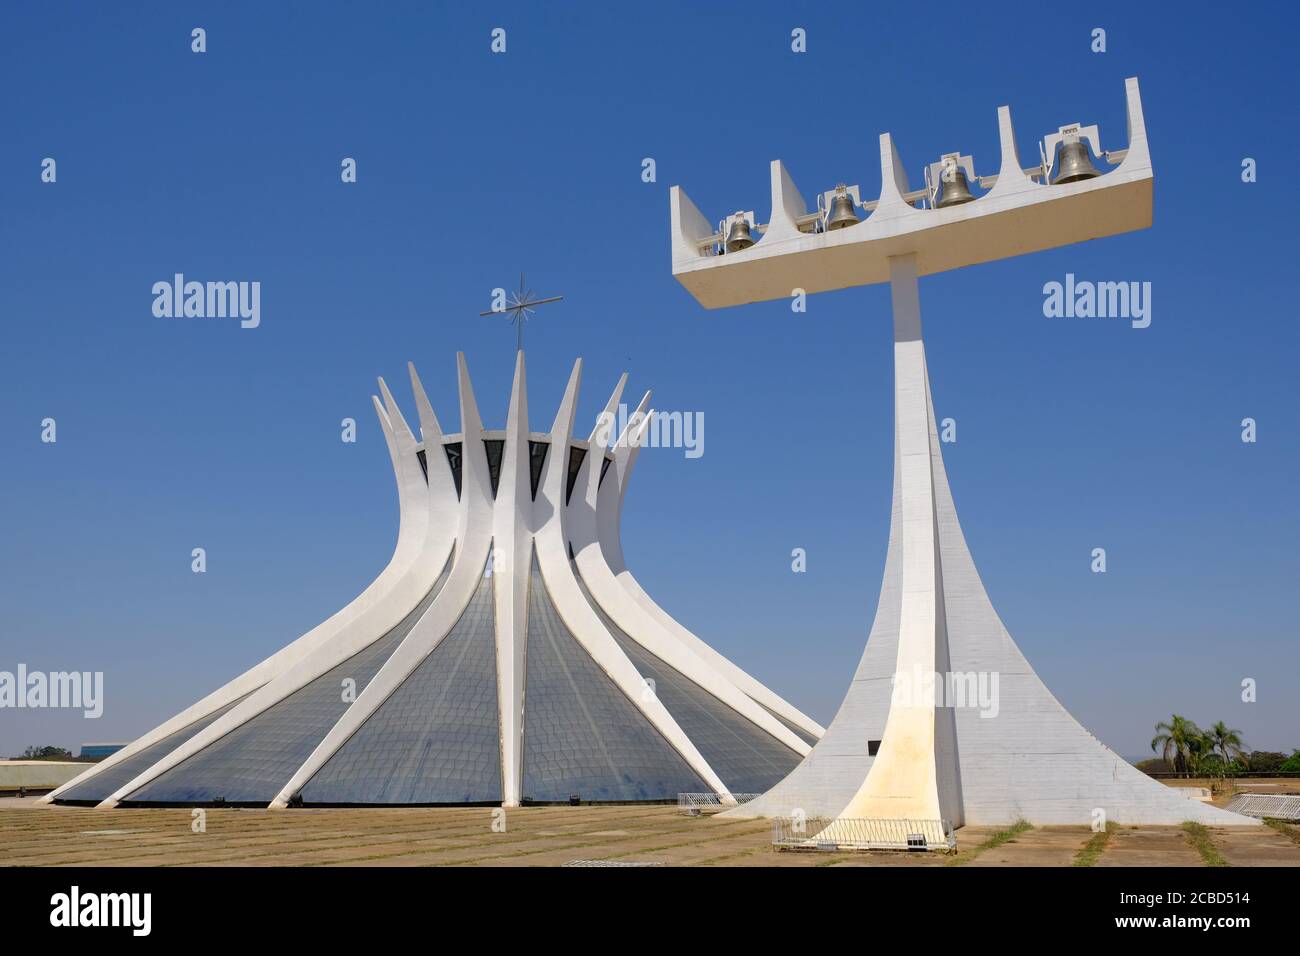 Brasile Brasilia - Cattedrale di Brasilia - Catedral Metropolitana Nossa Senhora Aparecida Foto Stock